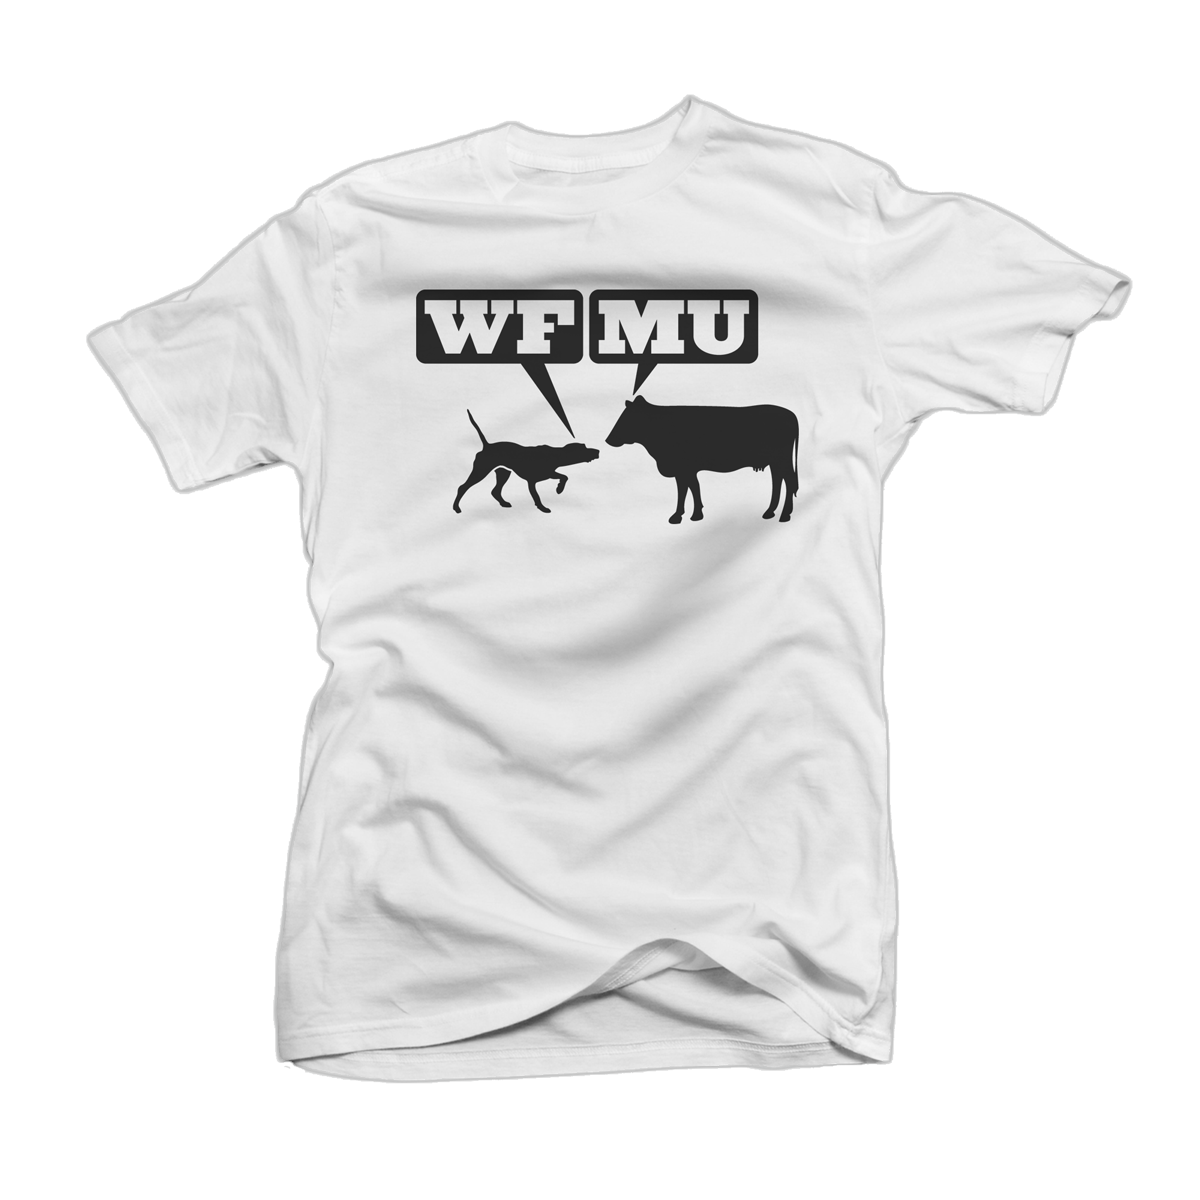 The Classic! Woof-Moo Black Print on White T-Shirt